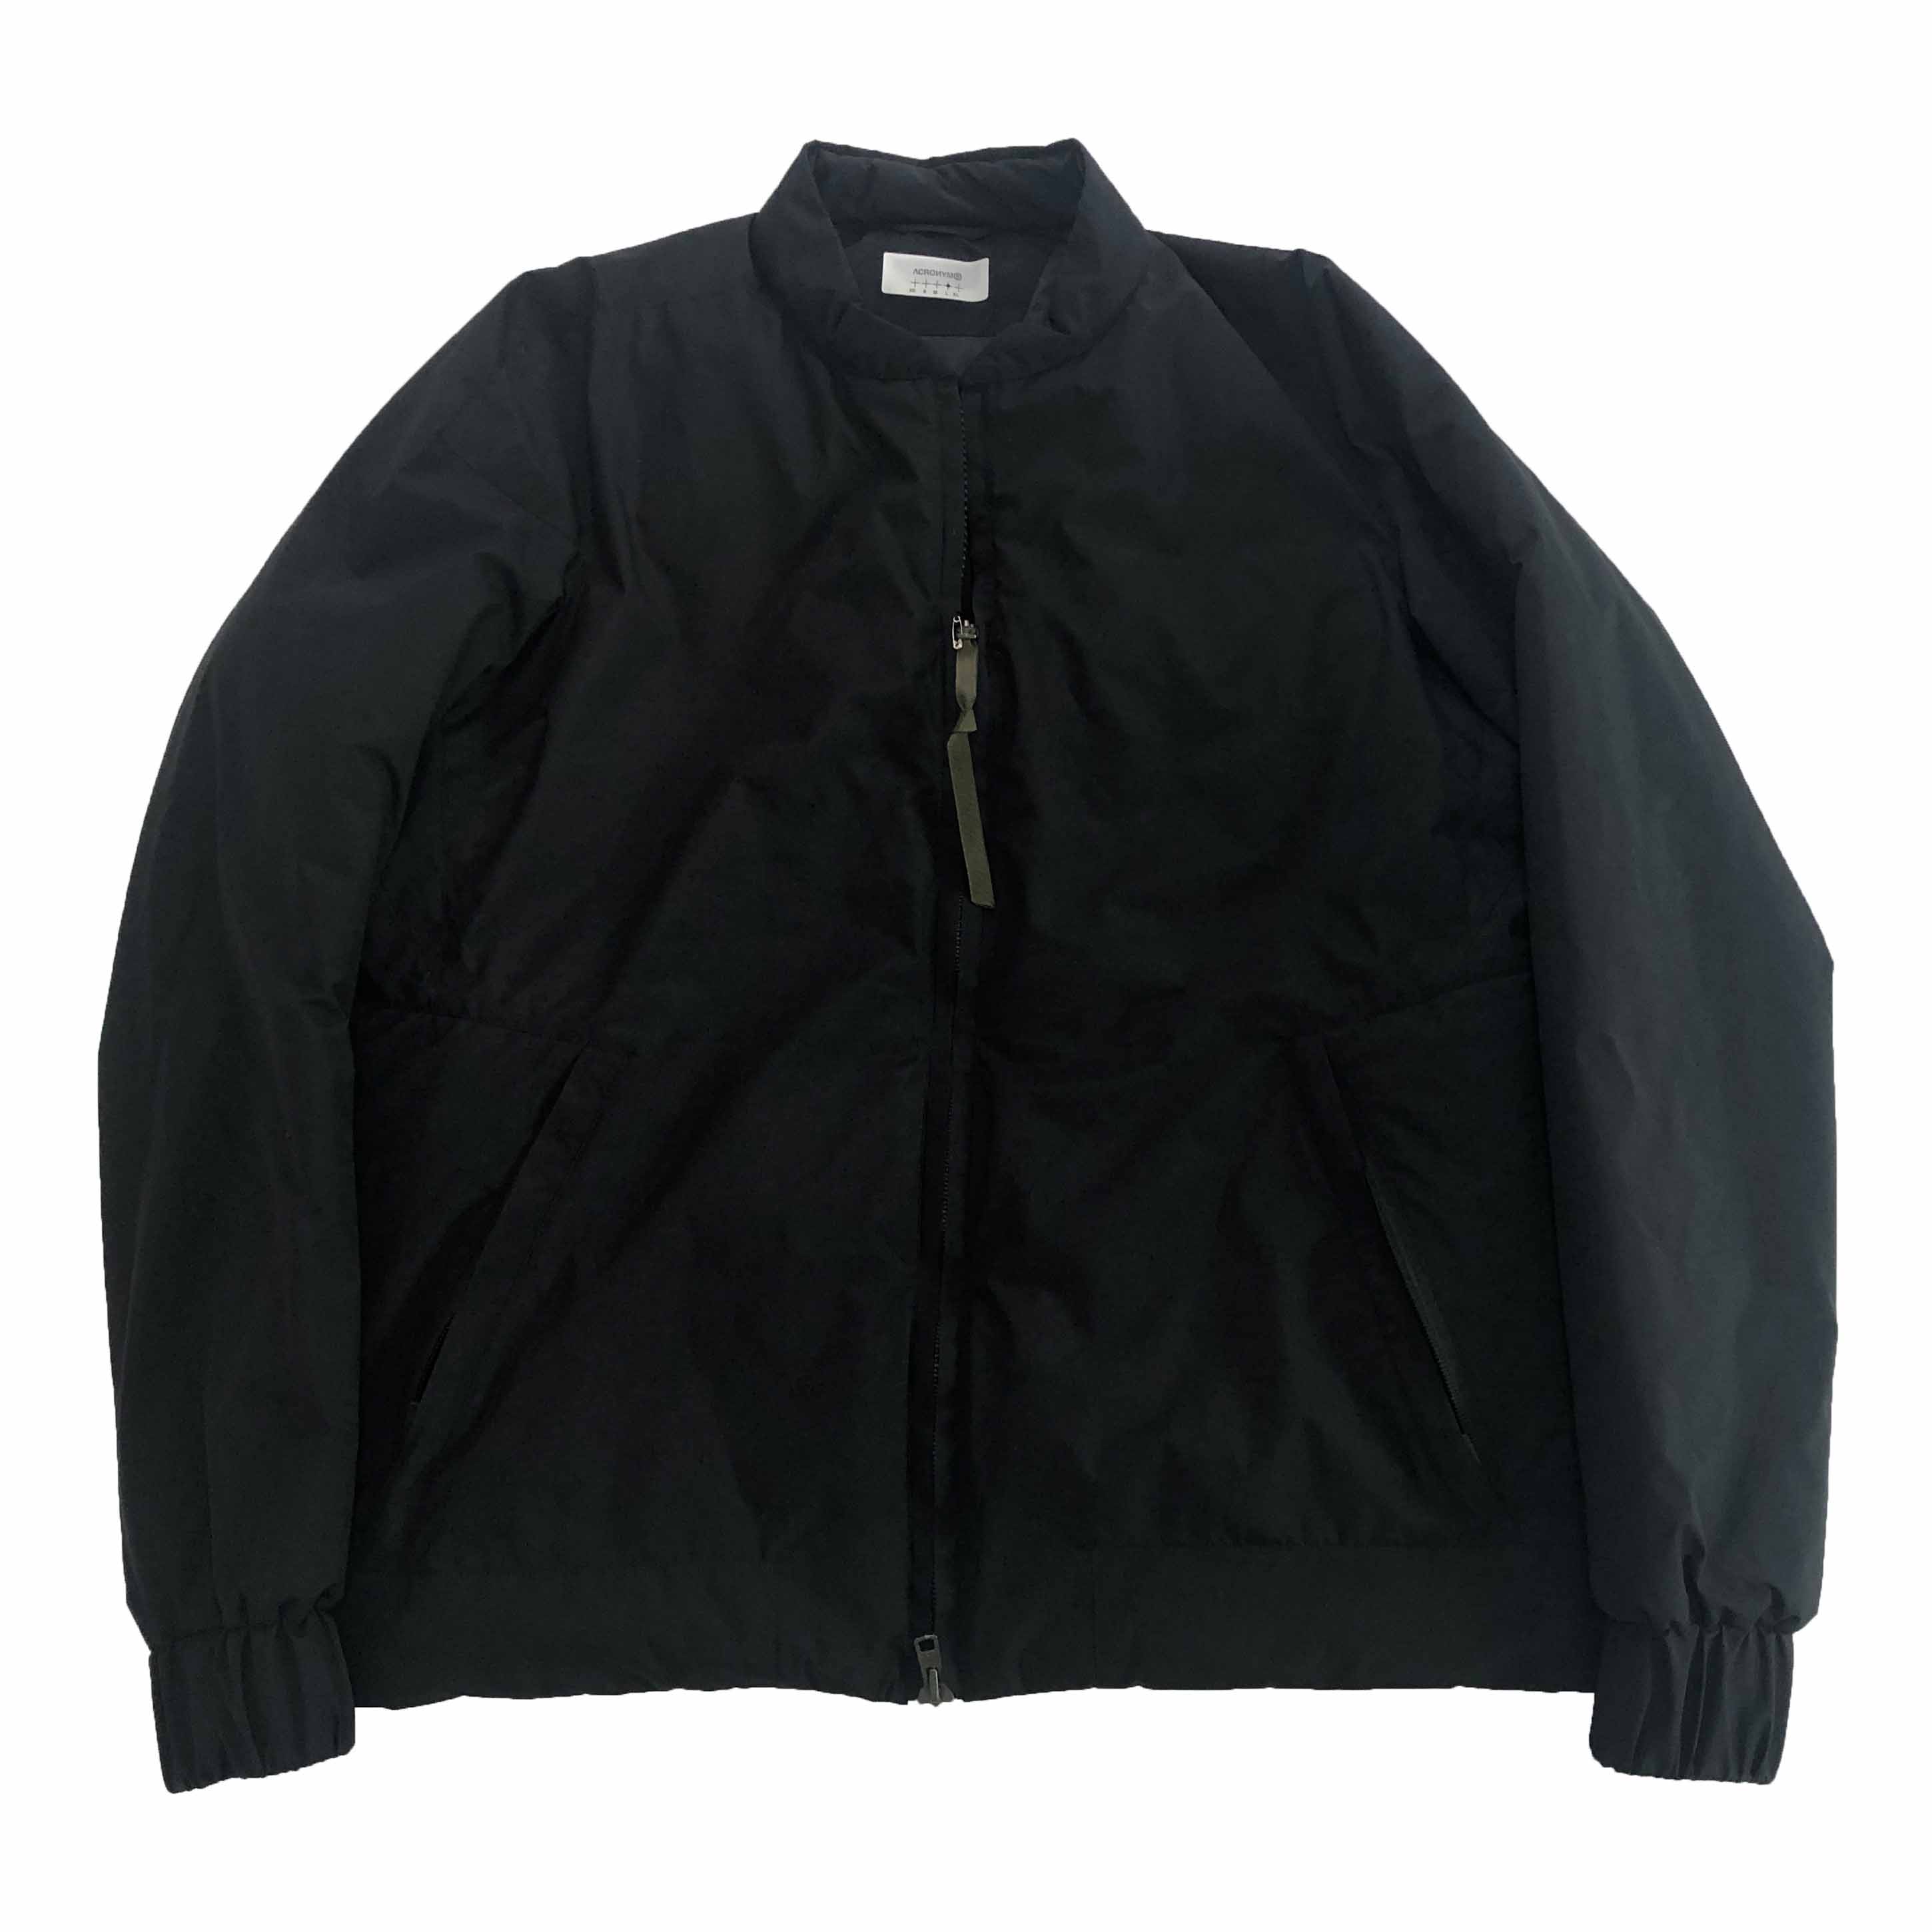 [Acronym] Reversible Jacket Blk + Nvy - Size L